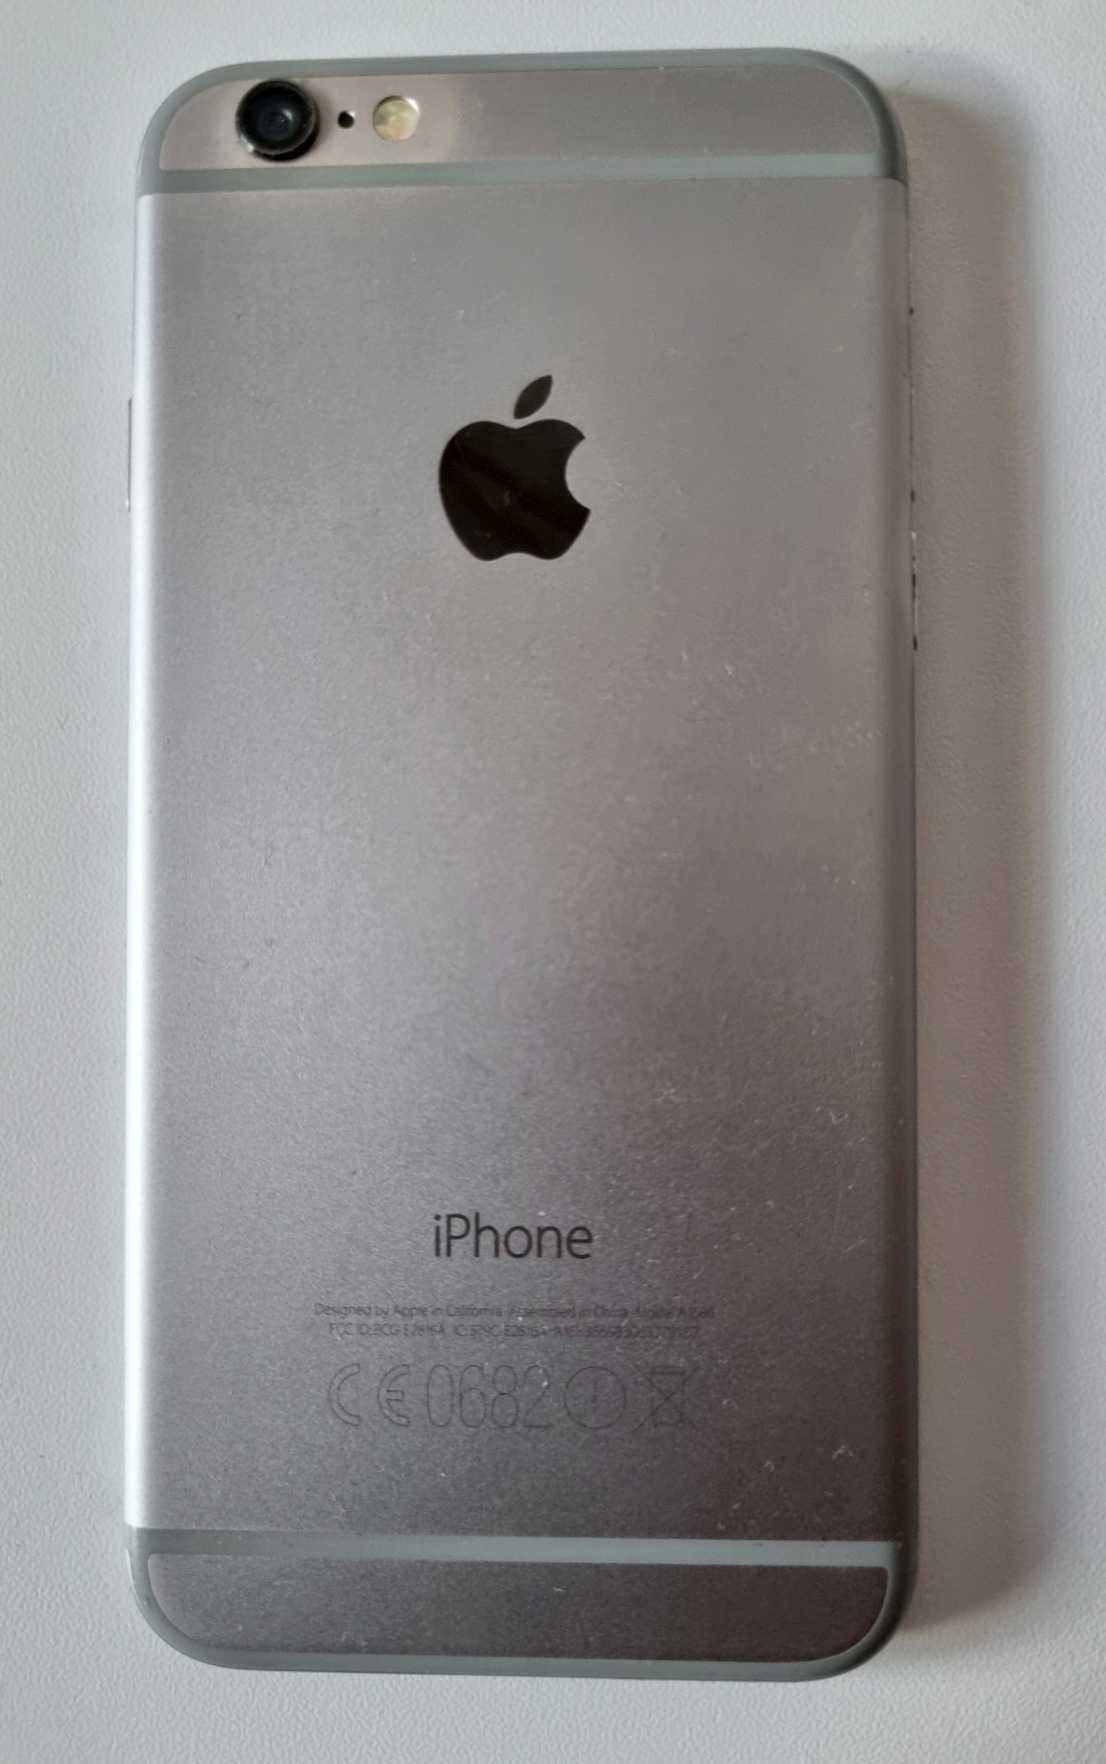 iPhone 6 16GB space grey